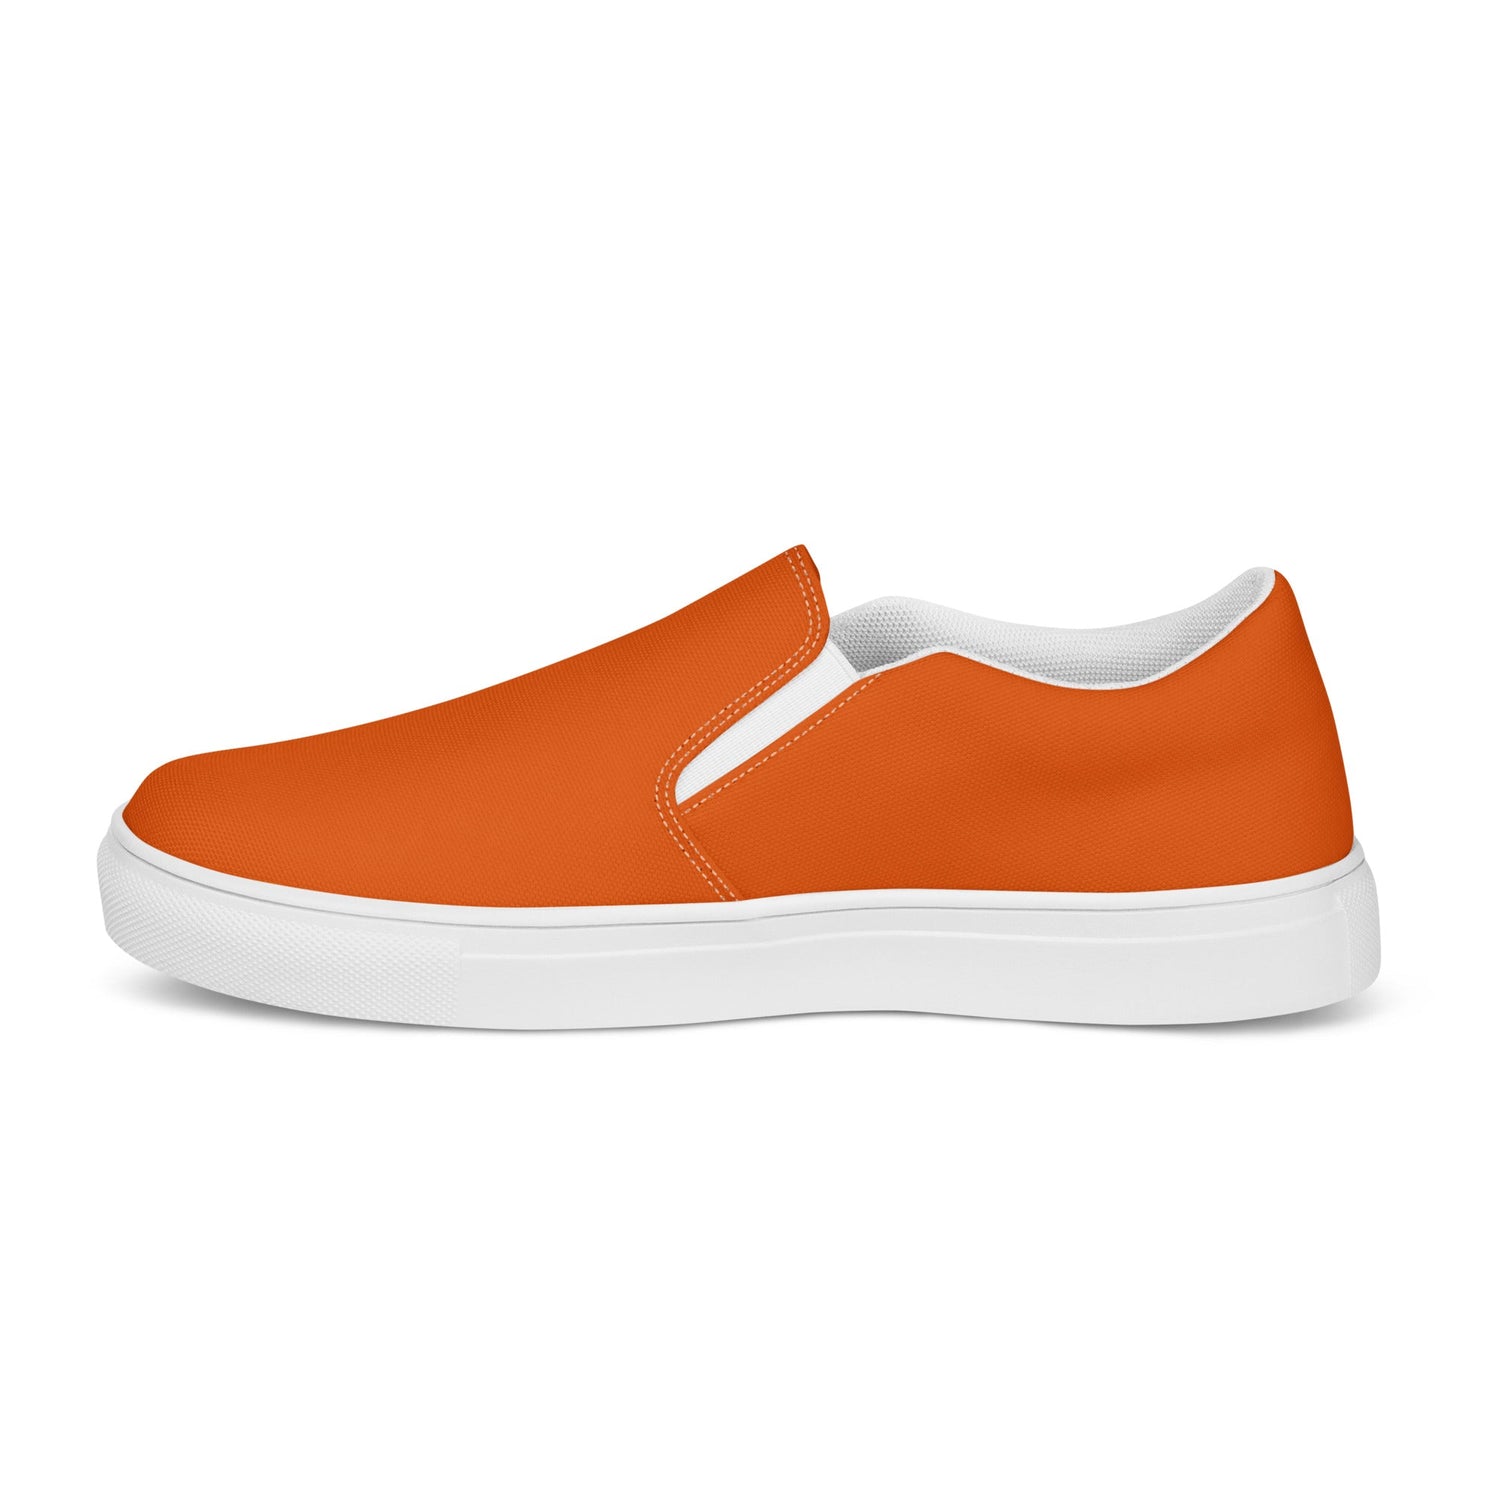 klasneakers Women’s slip-on canvas shoes - Dark Orange